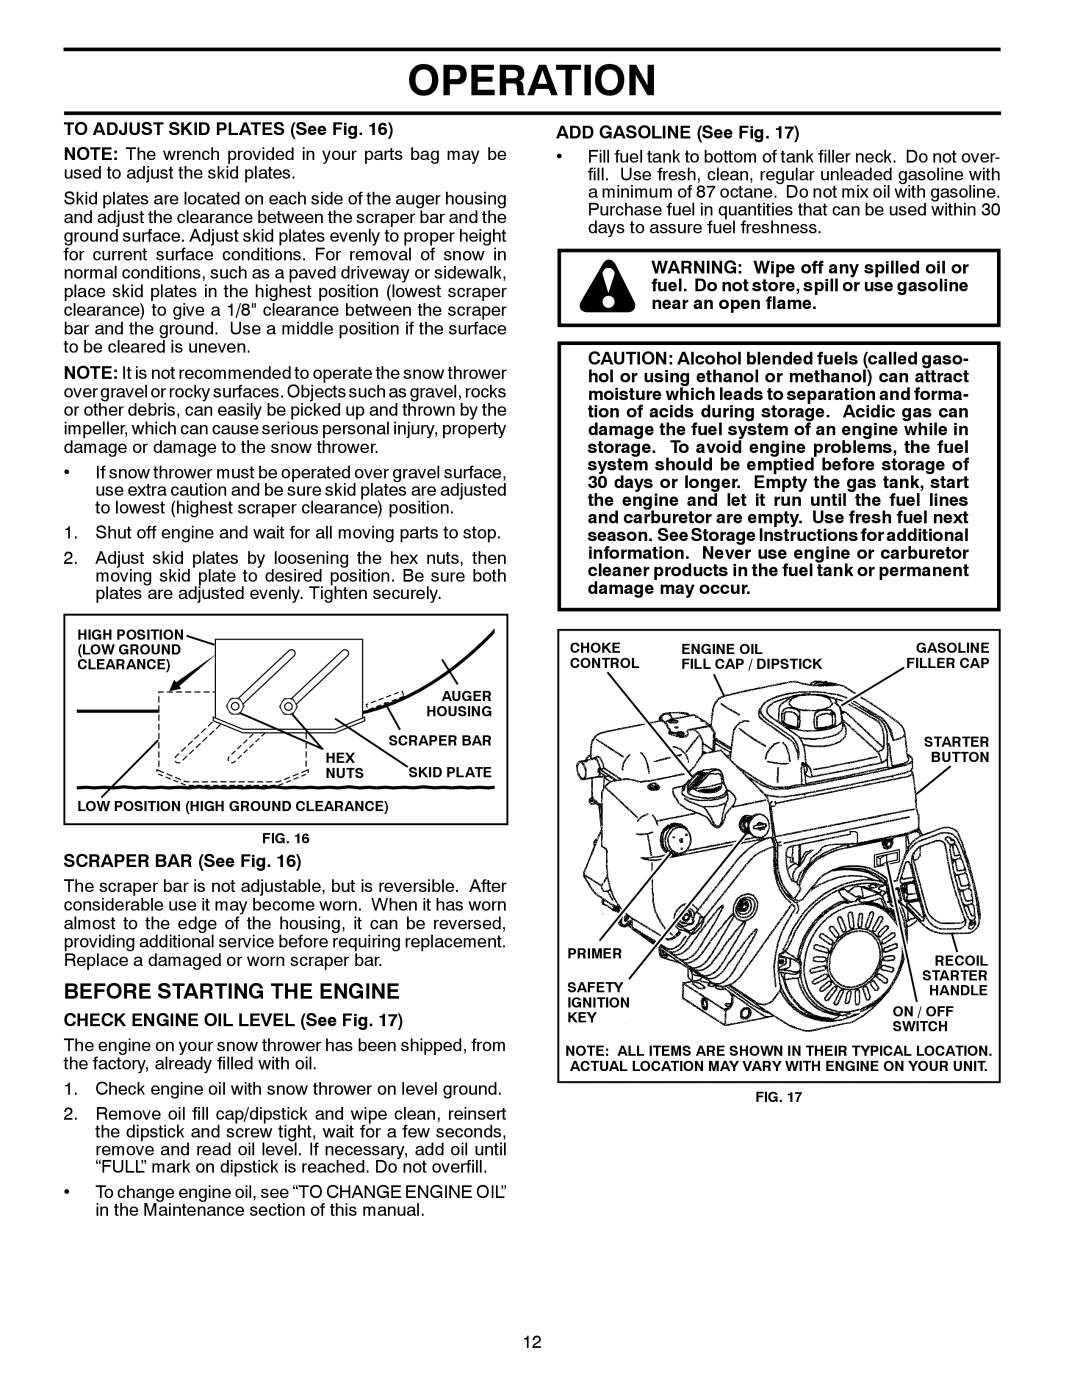 Poulan PR827ES owner manual Before Starting The Engine, Operation, TO ADJUST SKID PLATES See Fig, SCRAPER BAR See Fig 